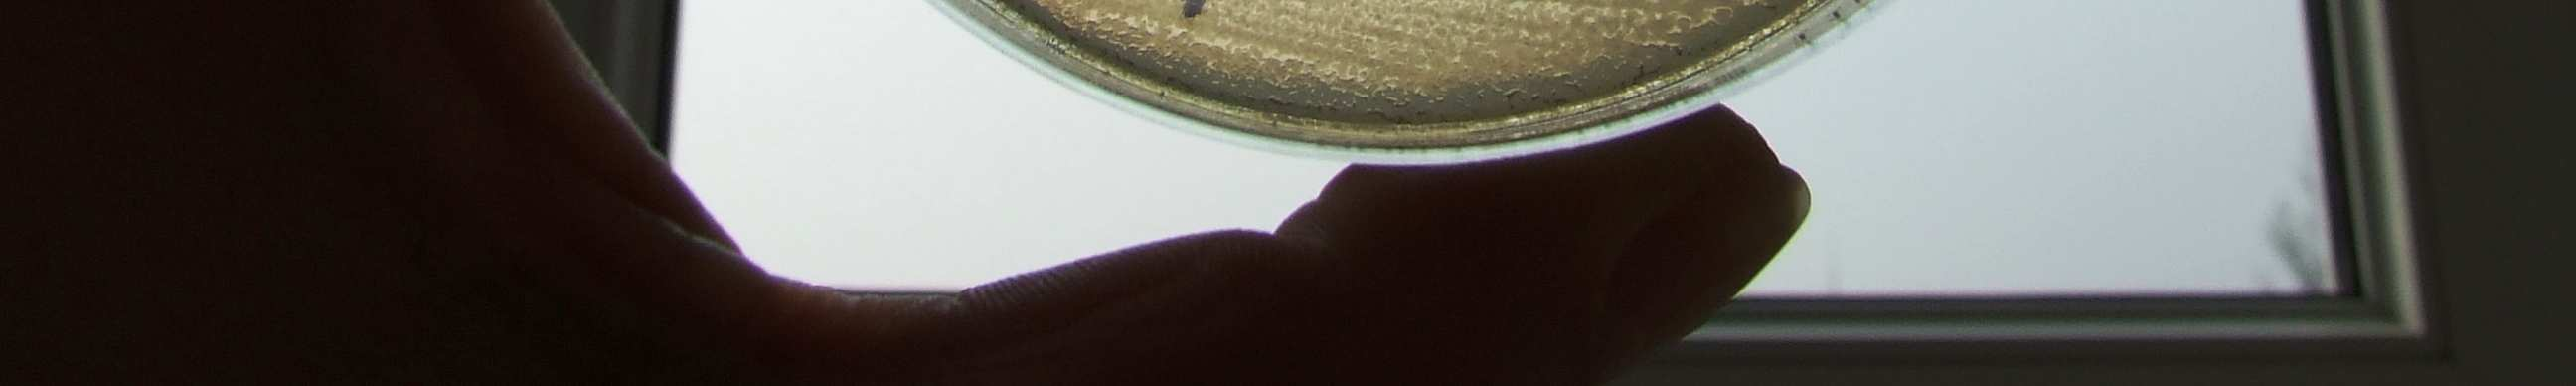 Az Aspergillus niger fonalas gomba